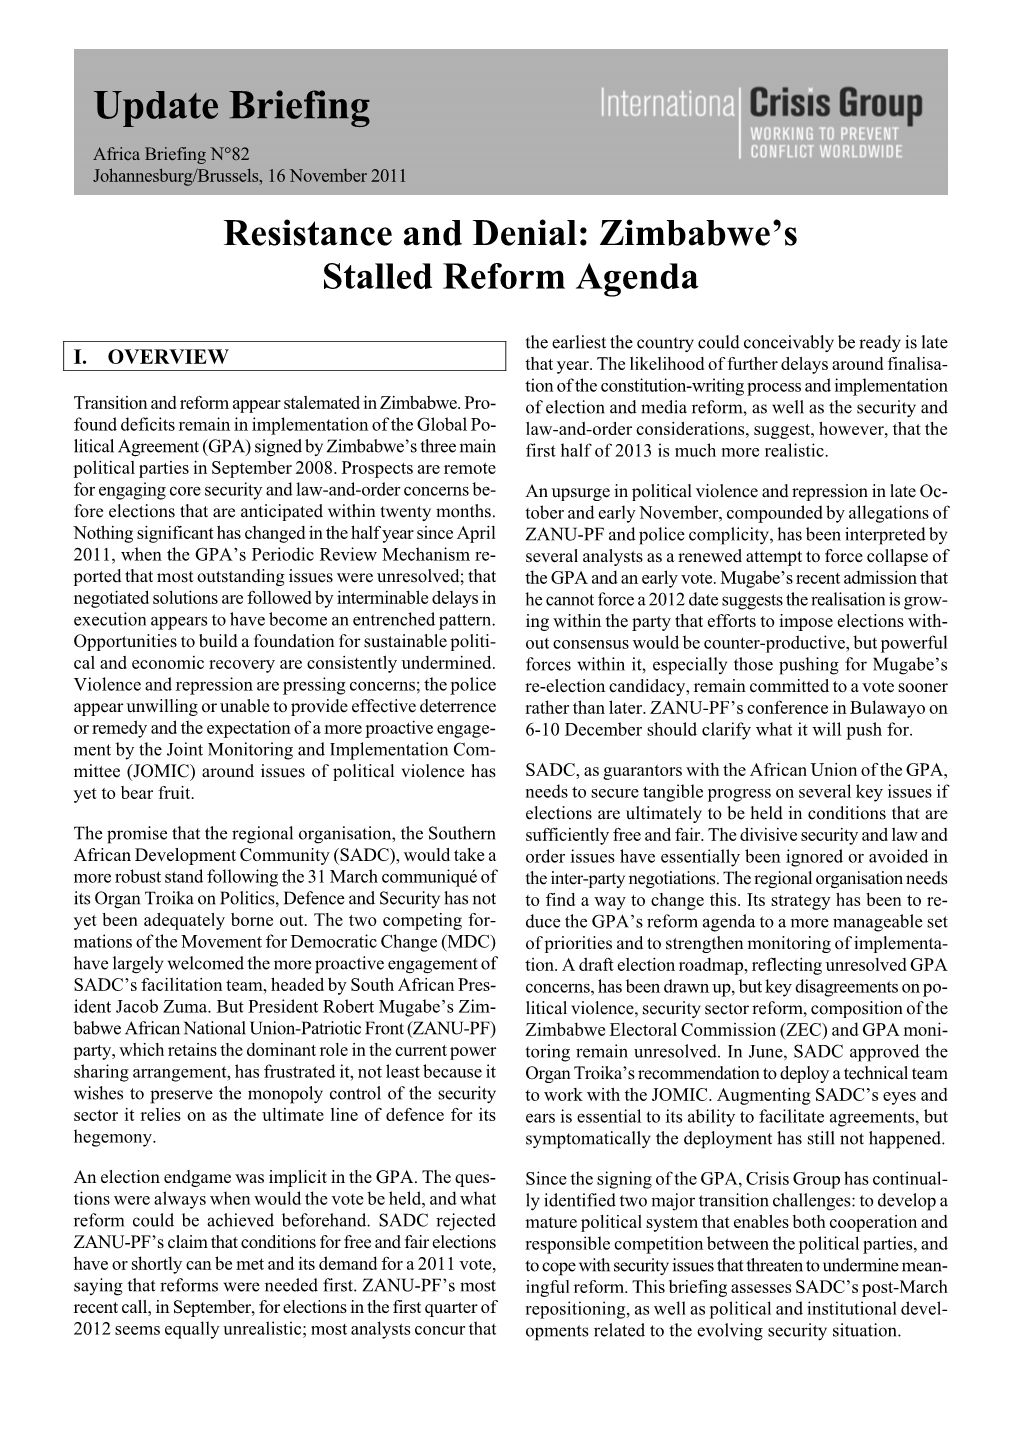 Resistance and Denial: Zimbabwe's Stalled Reform Agenda